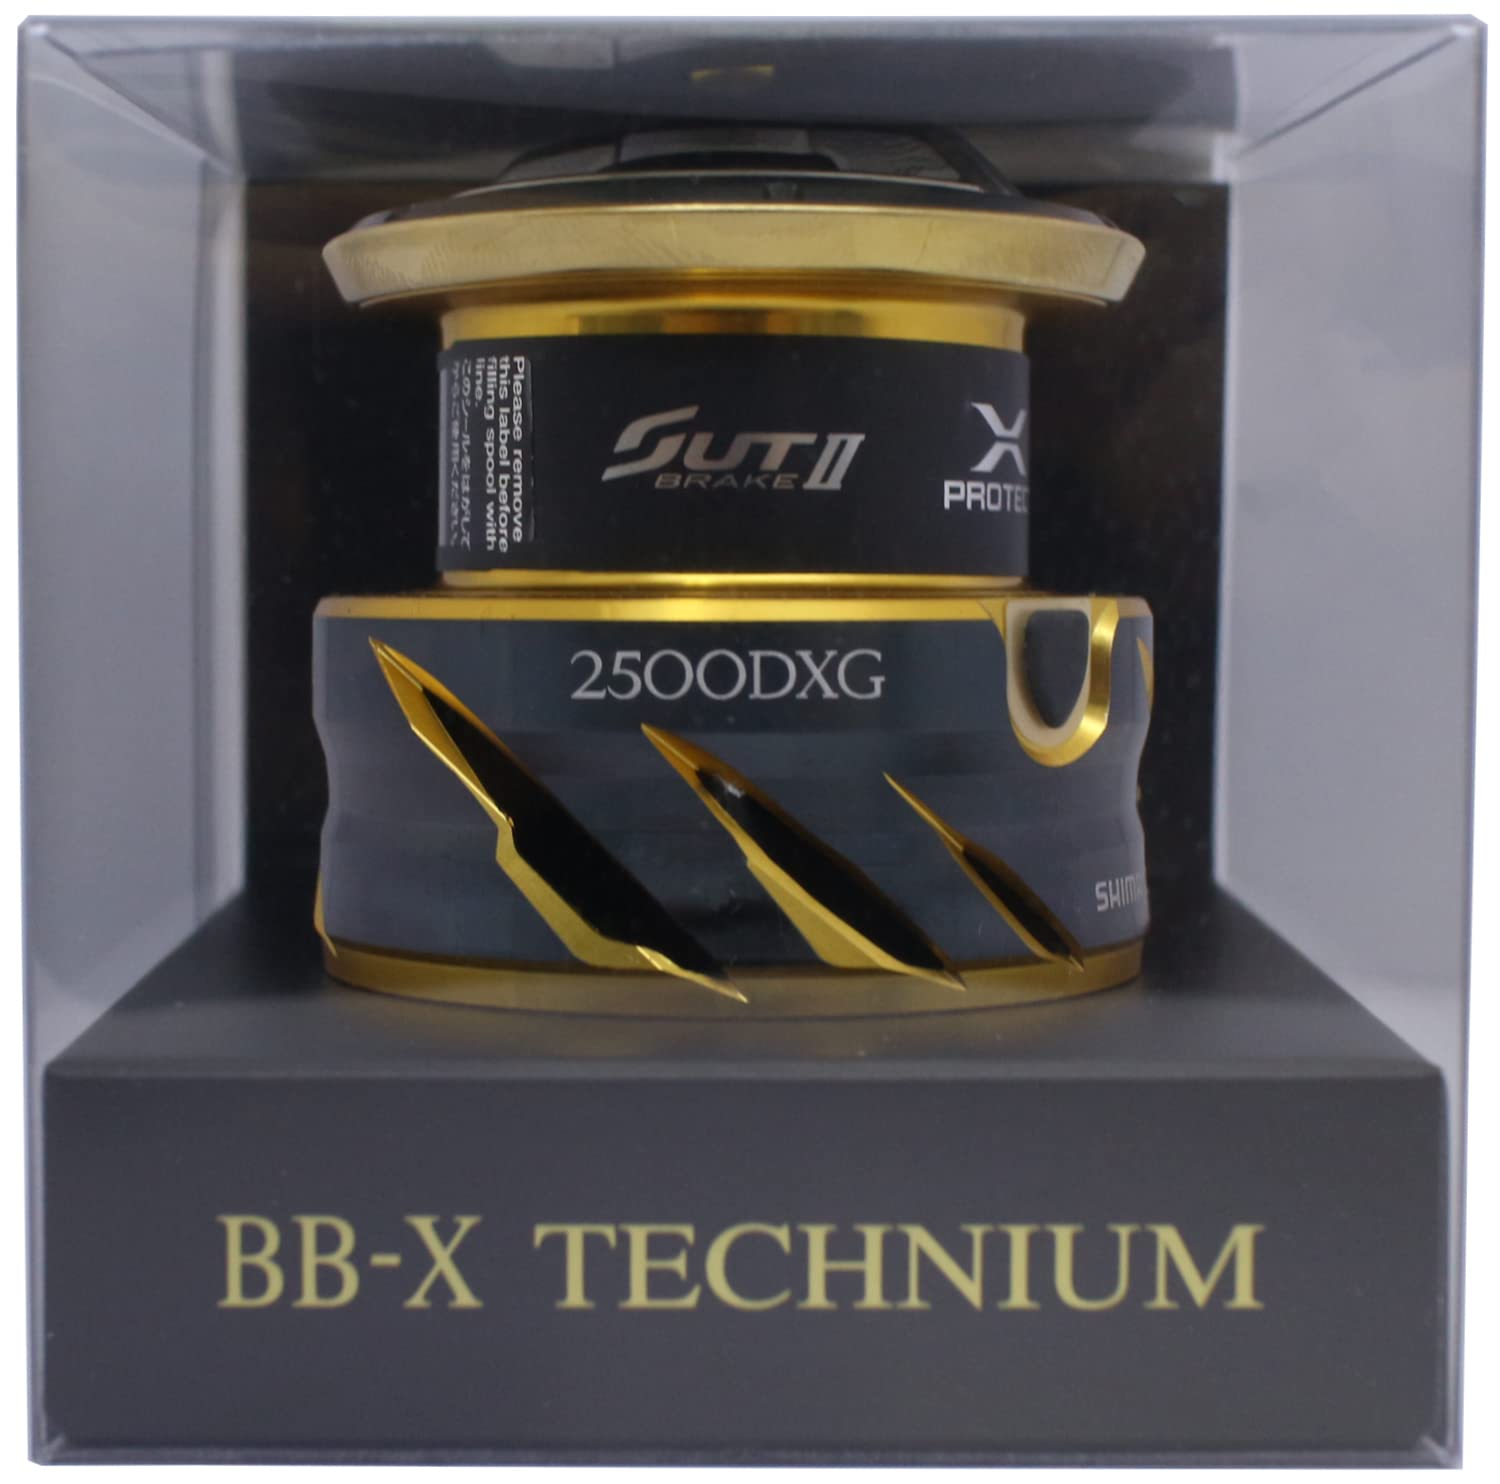 Genuine Parts 21 BB-X Technium 2500DXG SUT R Spool Set Part No. 13C68 - BanzaiHobby